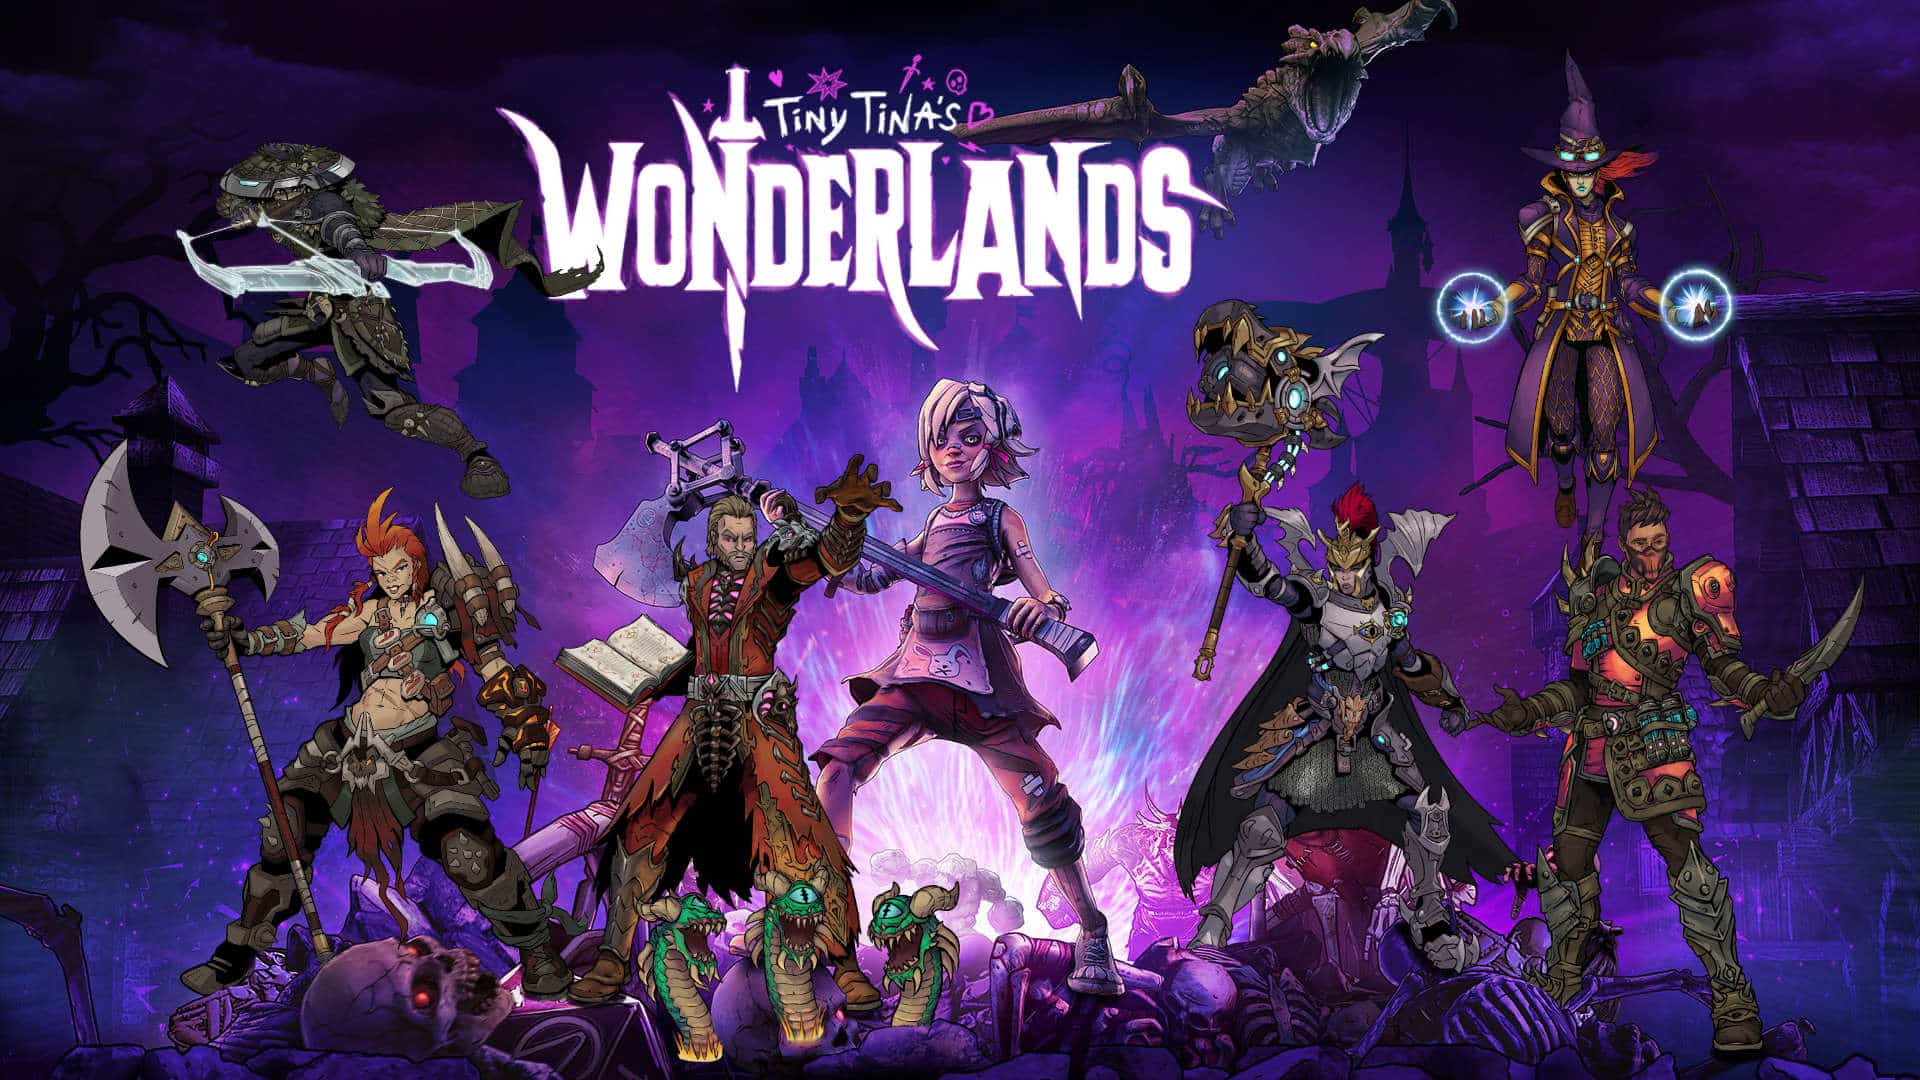 Tiny Tina's Wonderlands: เกมแนว Fantasy จาก Borderlands เตรียมปล่อย DLC ใหม่ที่ชื่อว่า Molten Mirrors ซึ่งจะมาพร้อมคลาสตัวละครใหม่ในเกม | 4Gamers